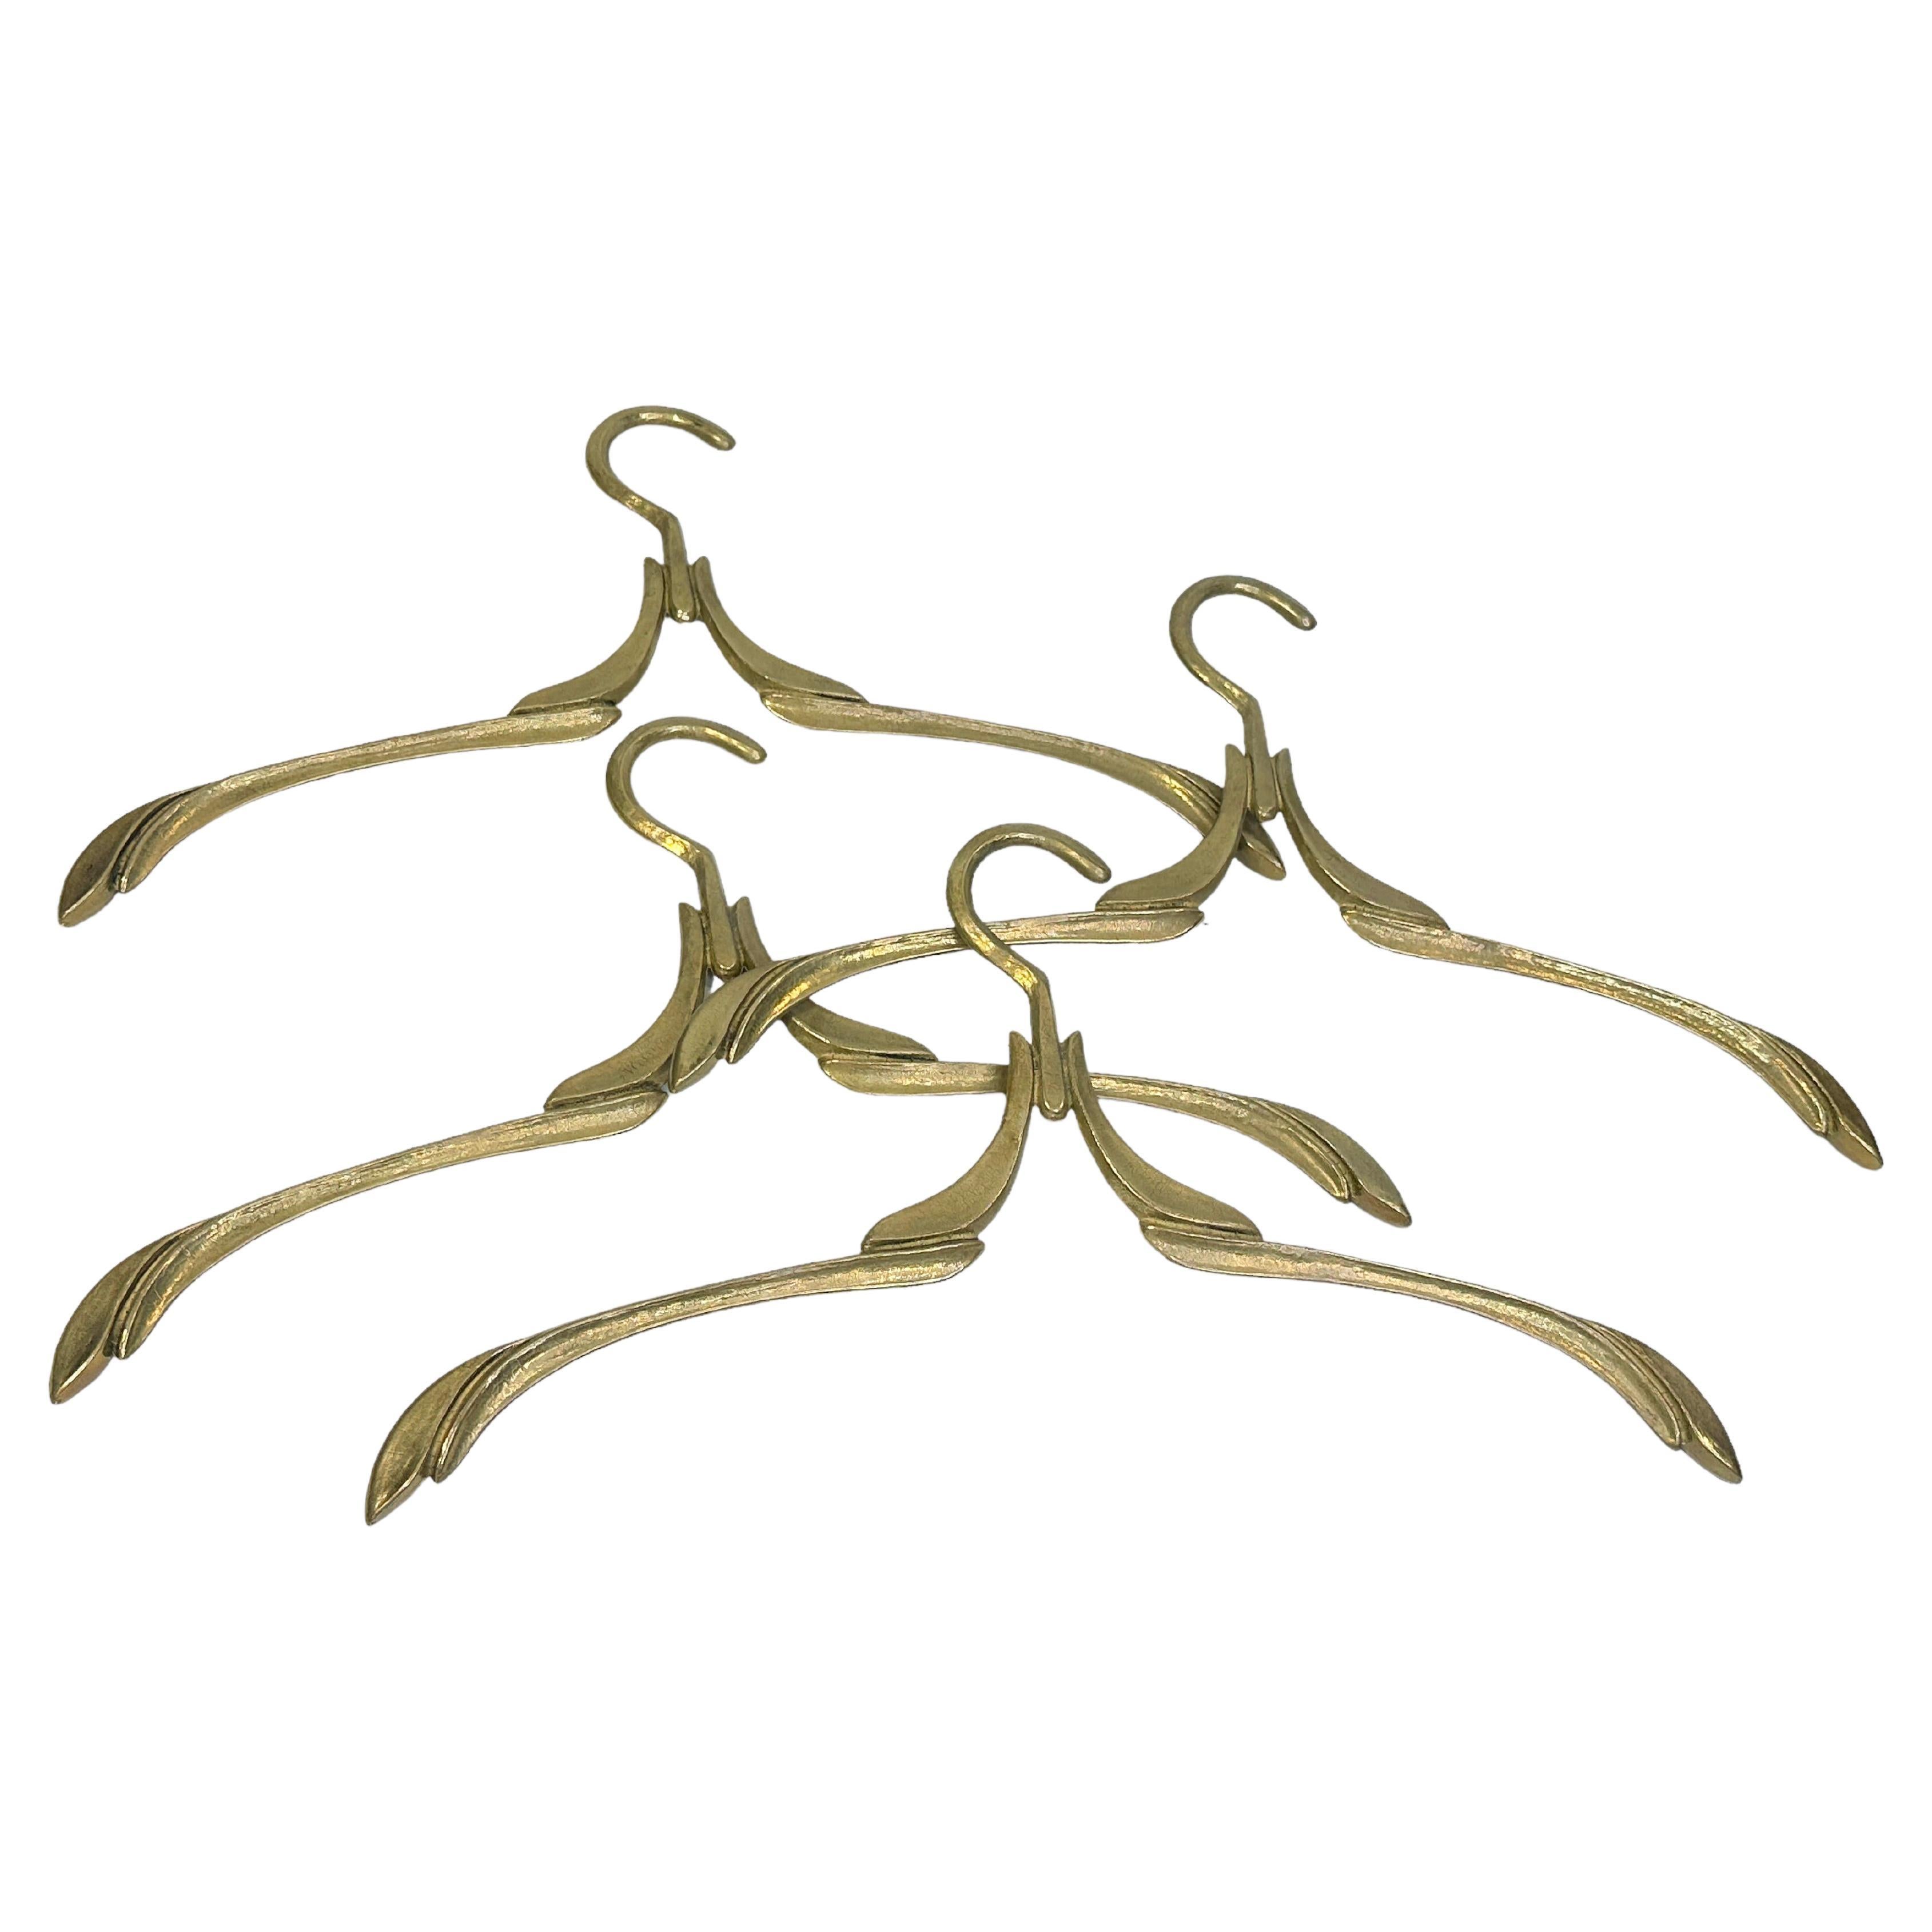 Set of Four Coat Hangers, Art Nouveau Style Solid Brass, Vintage 1950s to 1960s  For Sale